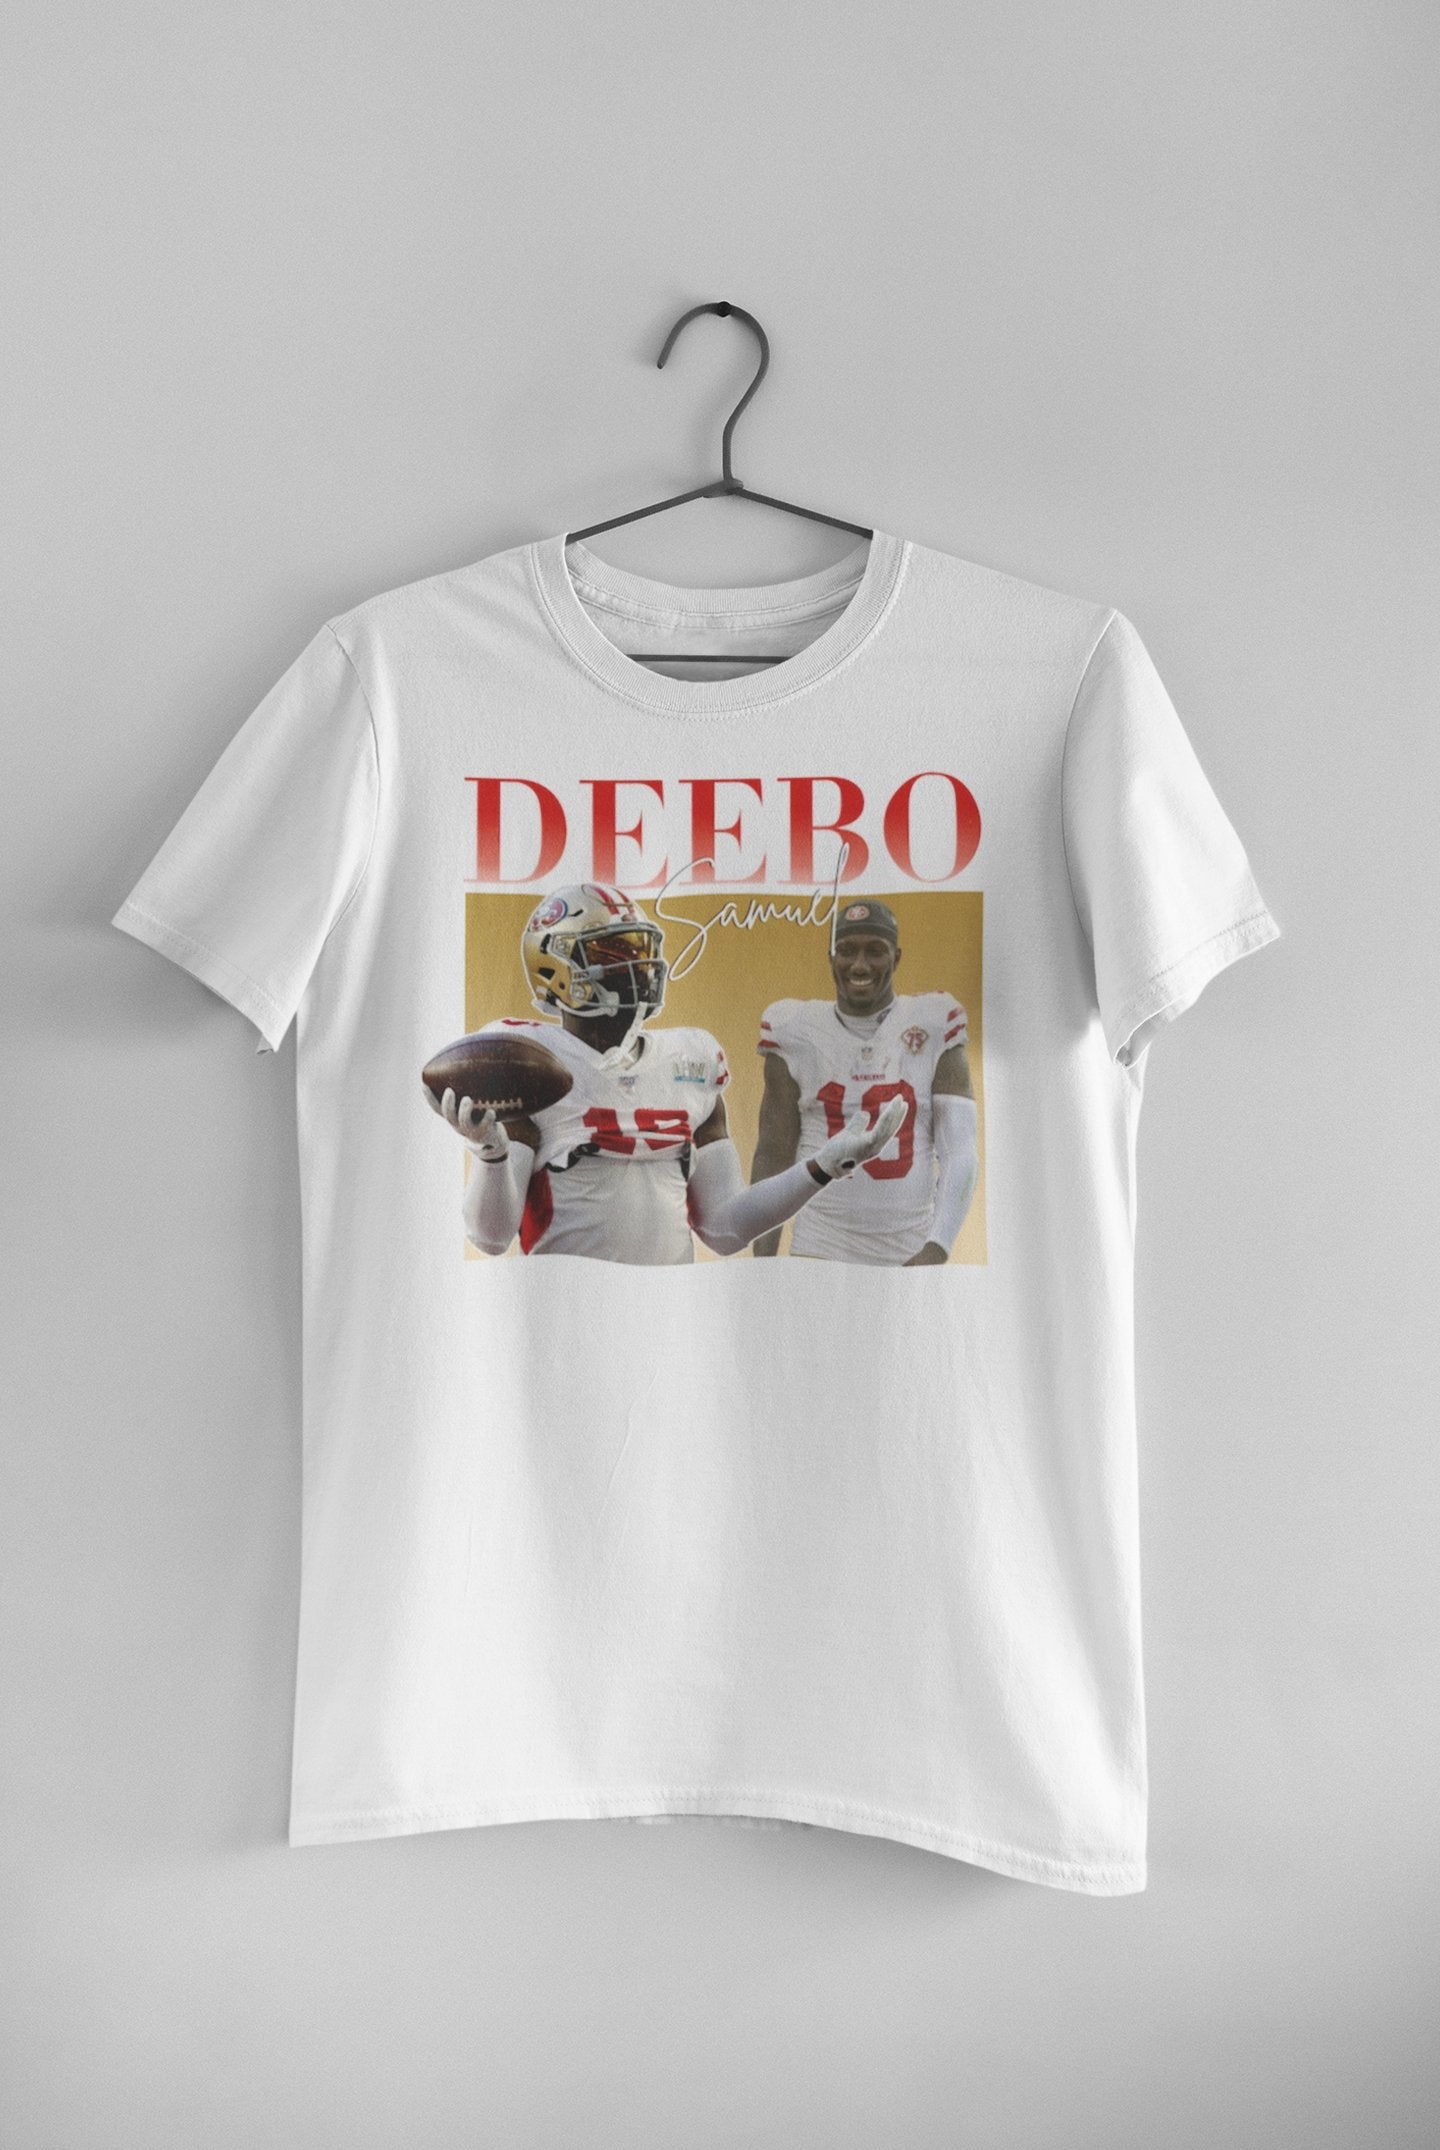 Deebo Samuel - Unisex T-shirt - Modern Vintage Apparel